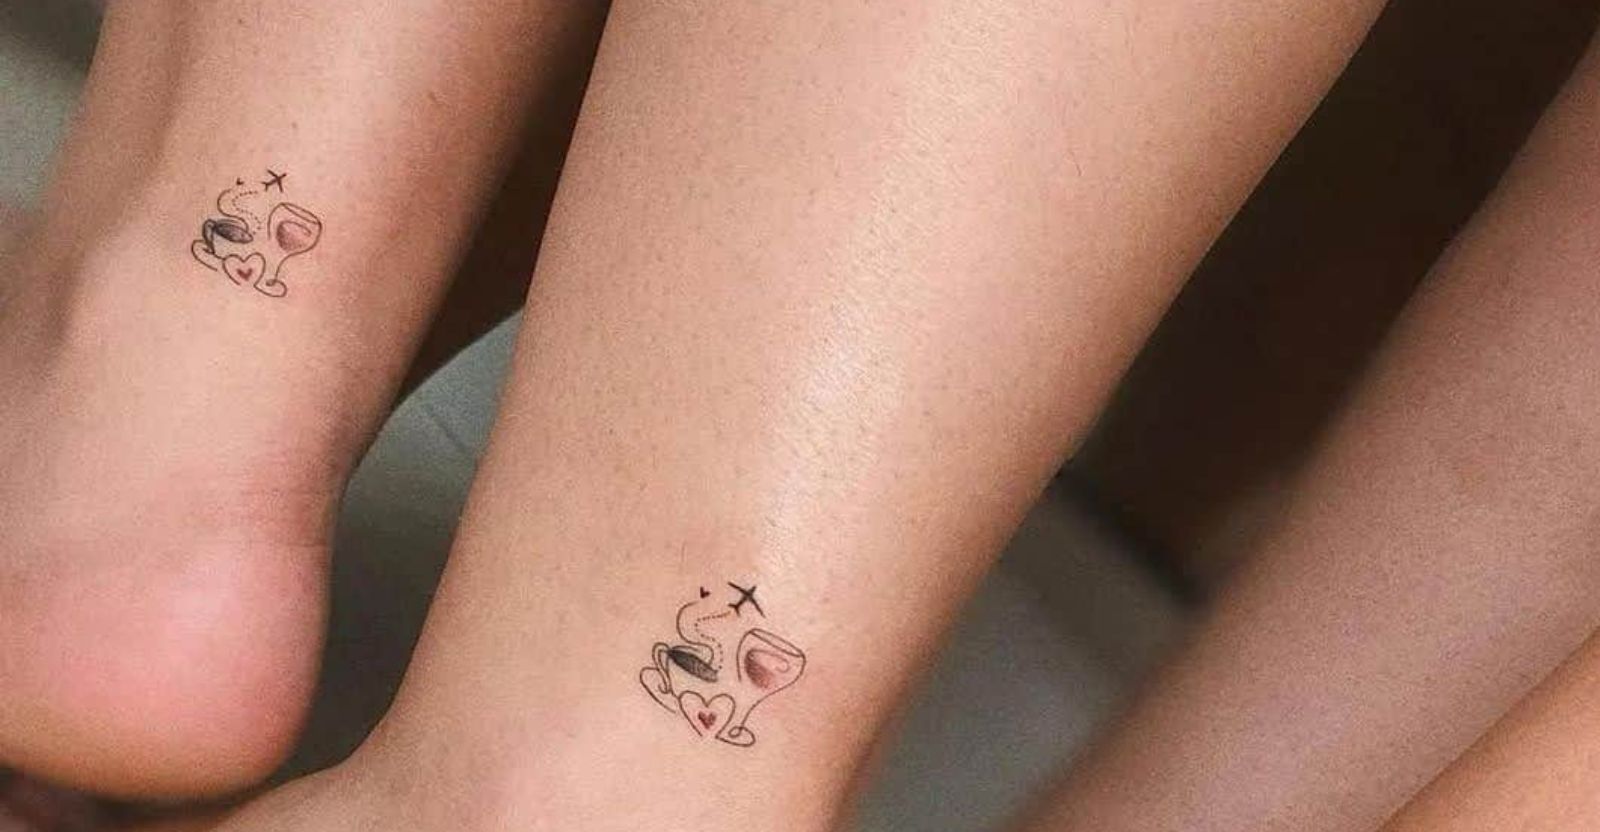 Stunning Small Friendship Tattoos - Small Friendship Tattoos - Small Tattoos  - MomCanvas